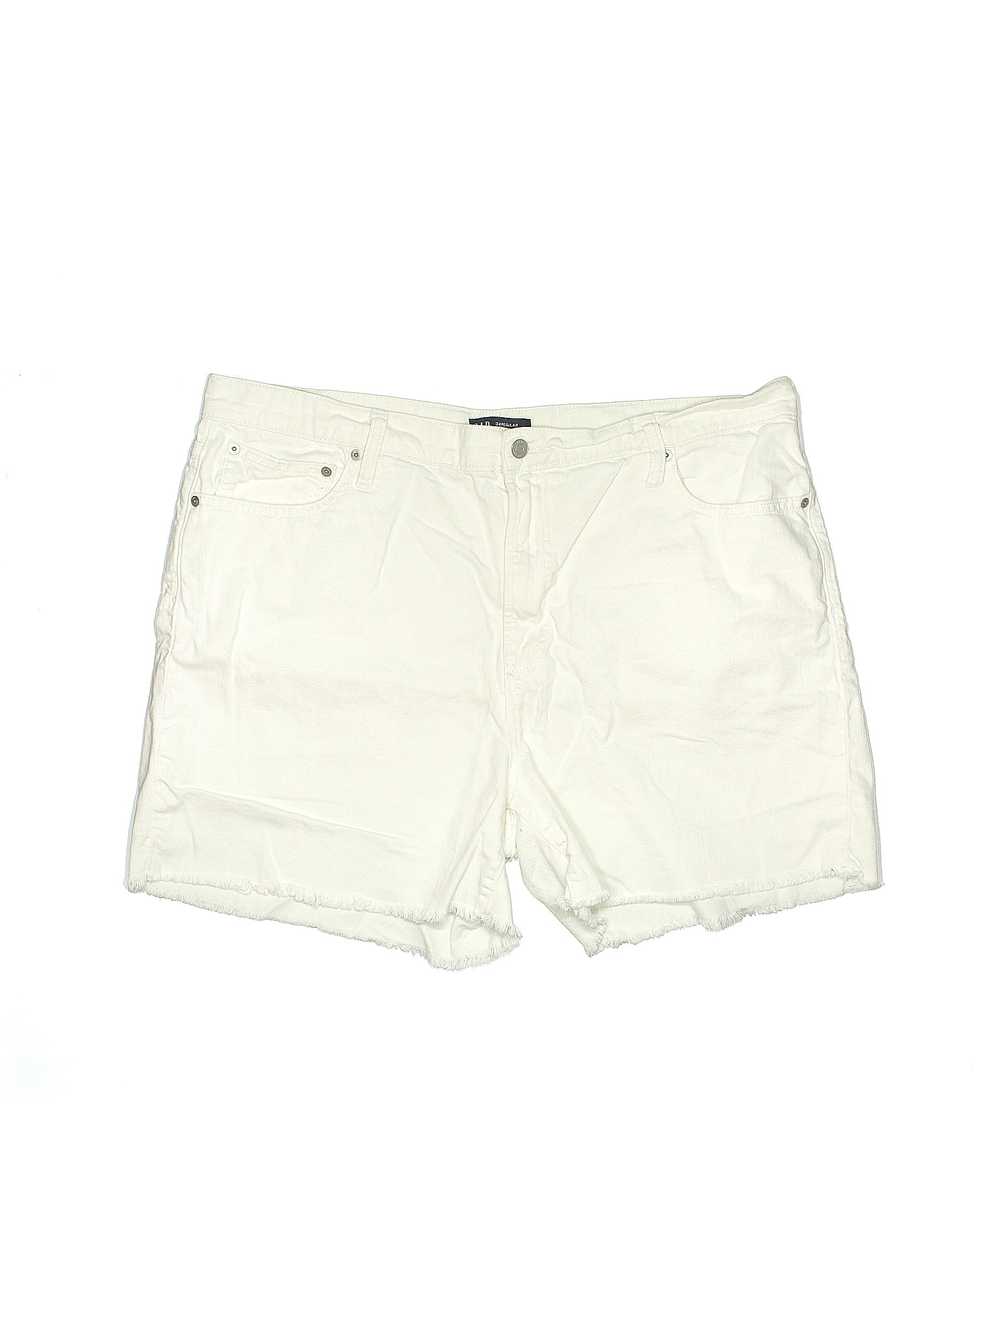 Gap Women Ivory Denim Shorts 34W - image 1